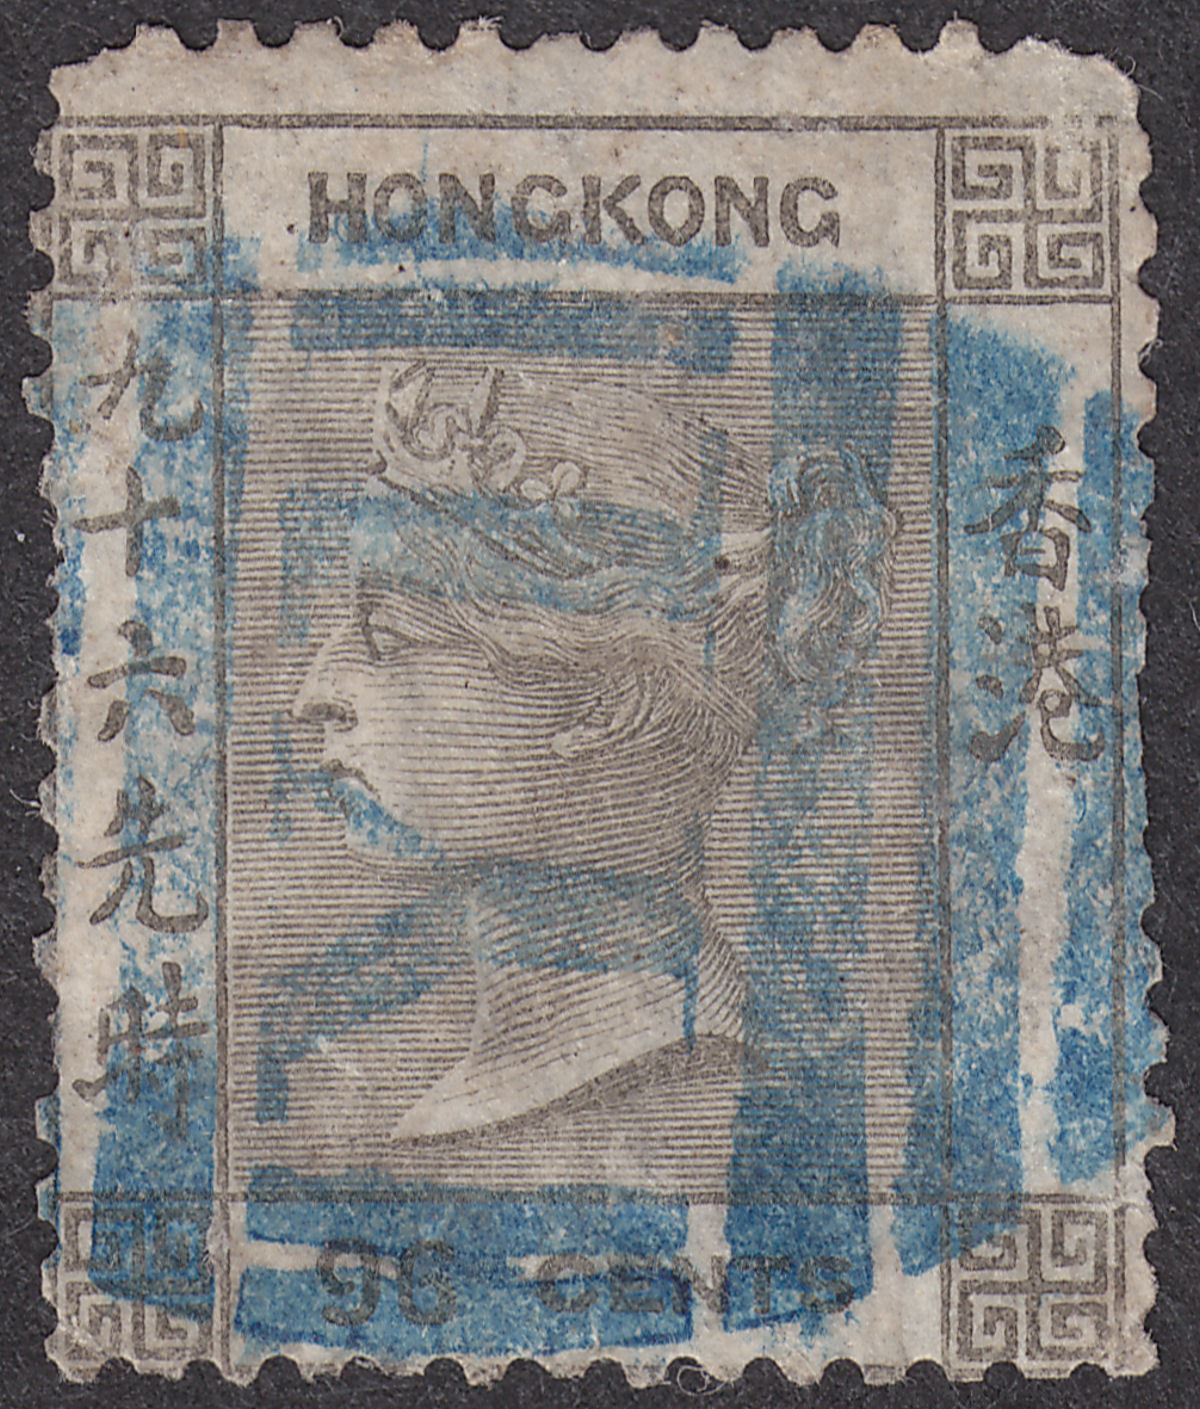 Hong Kong 1865 QV 96c Used with Yokohama Y1 postmark in blue SG Z43 PO Japan